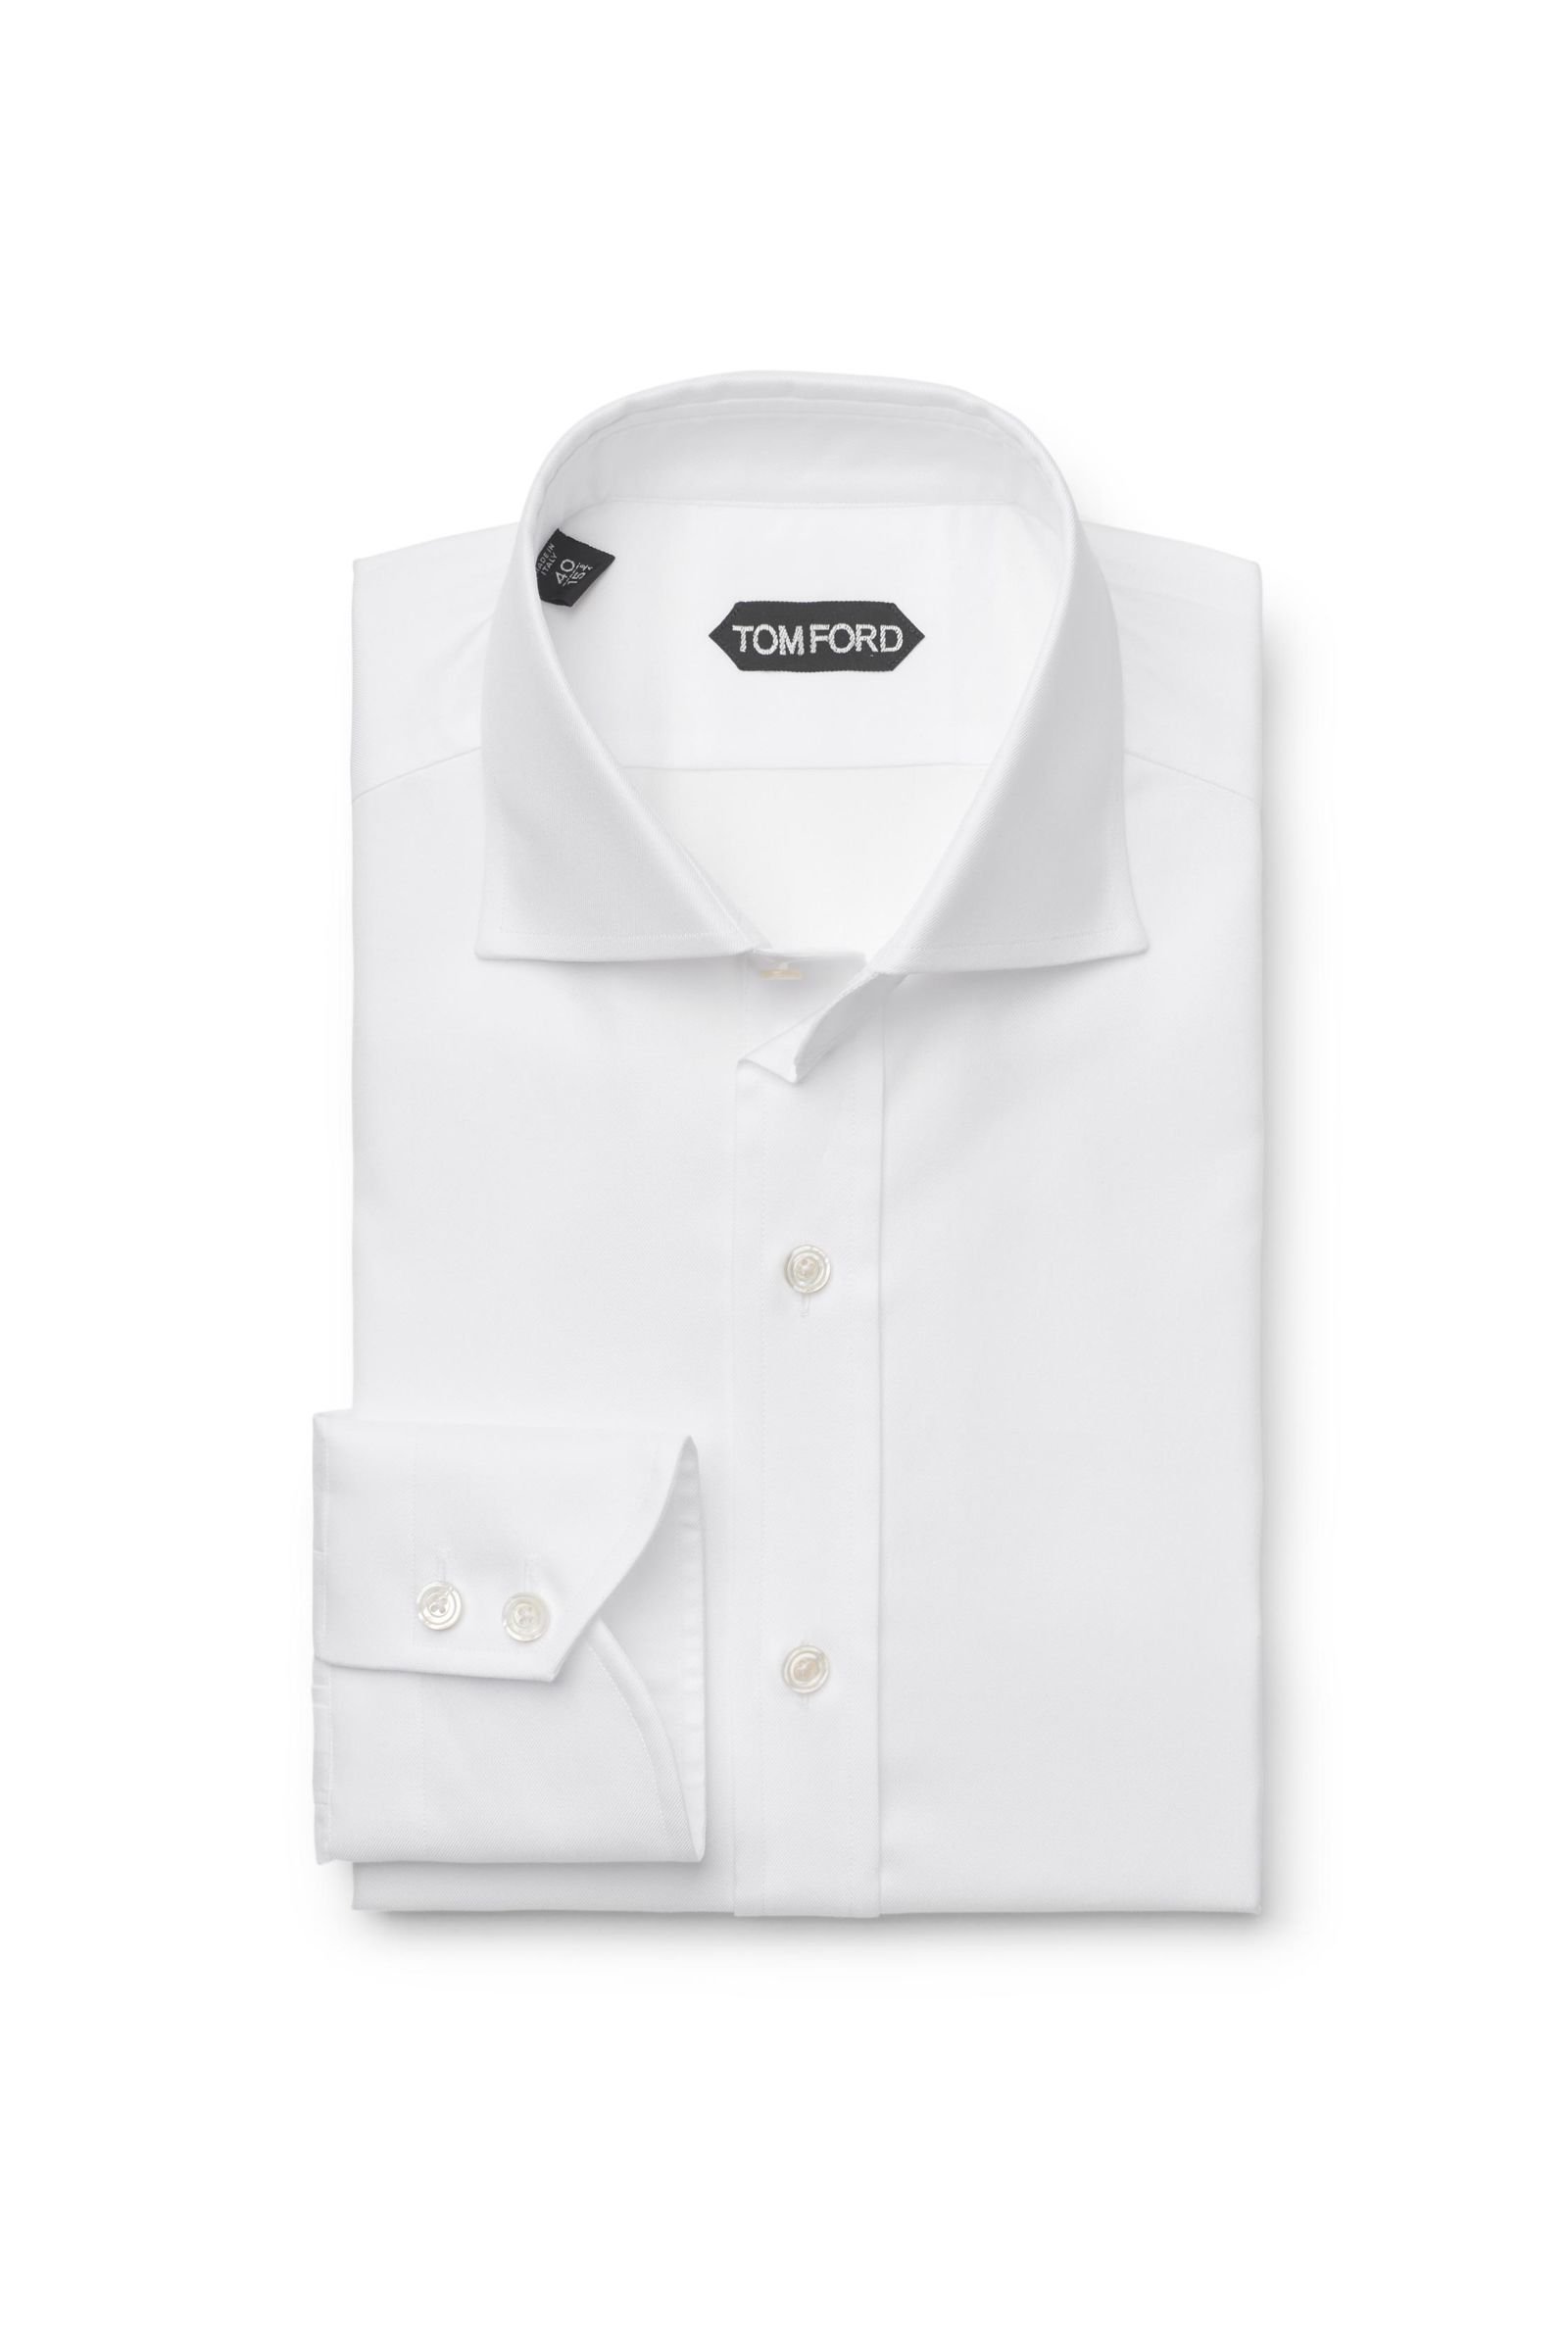 TOM FORD business shirt Kent collar white | BRAUN Hamburg